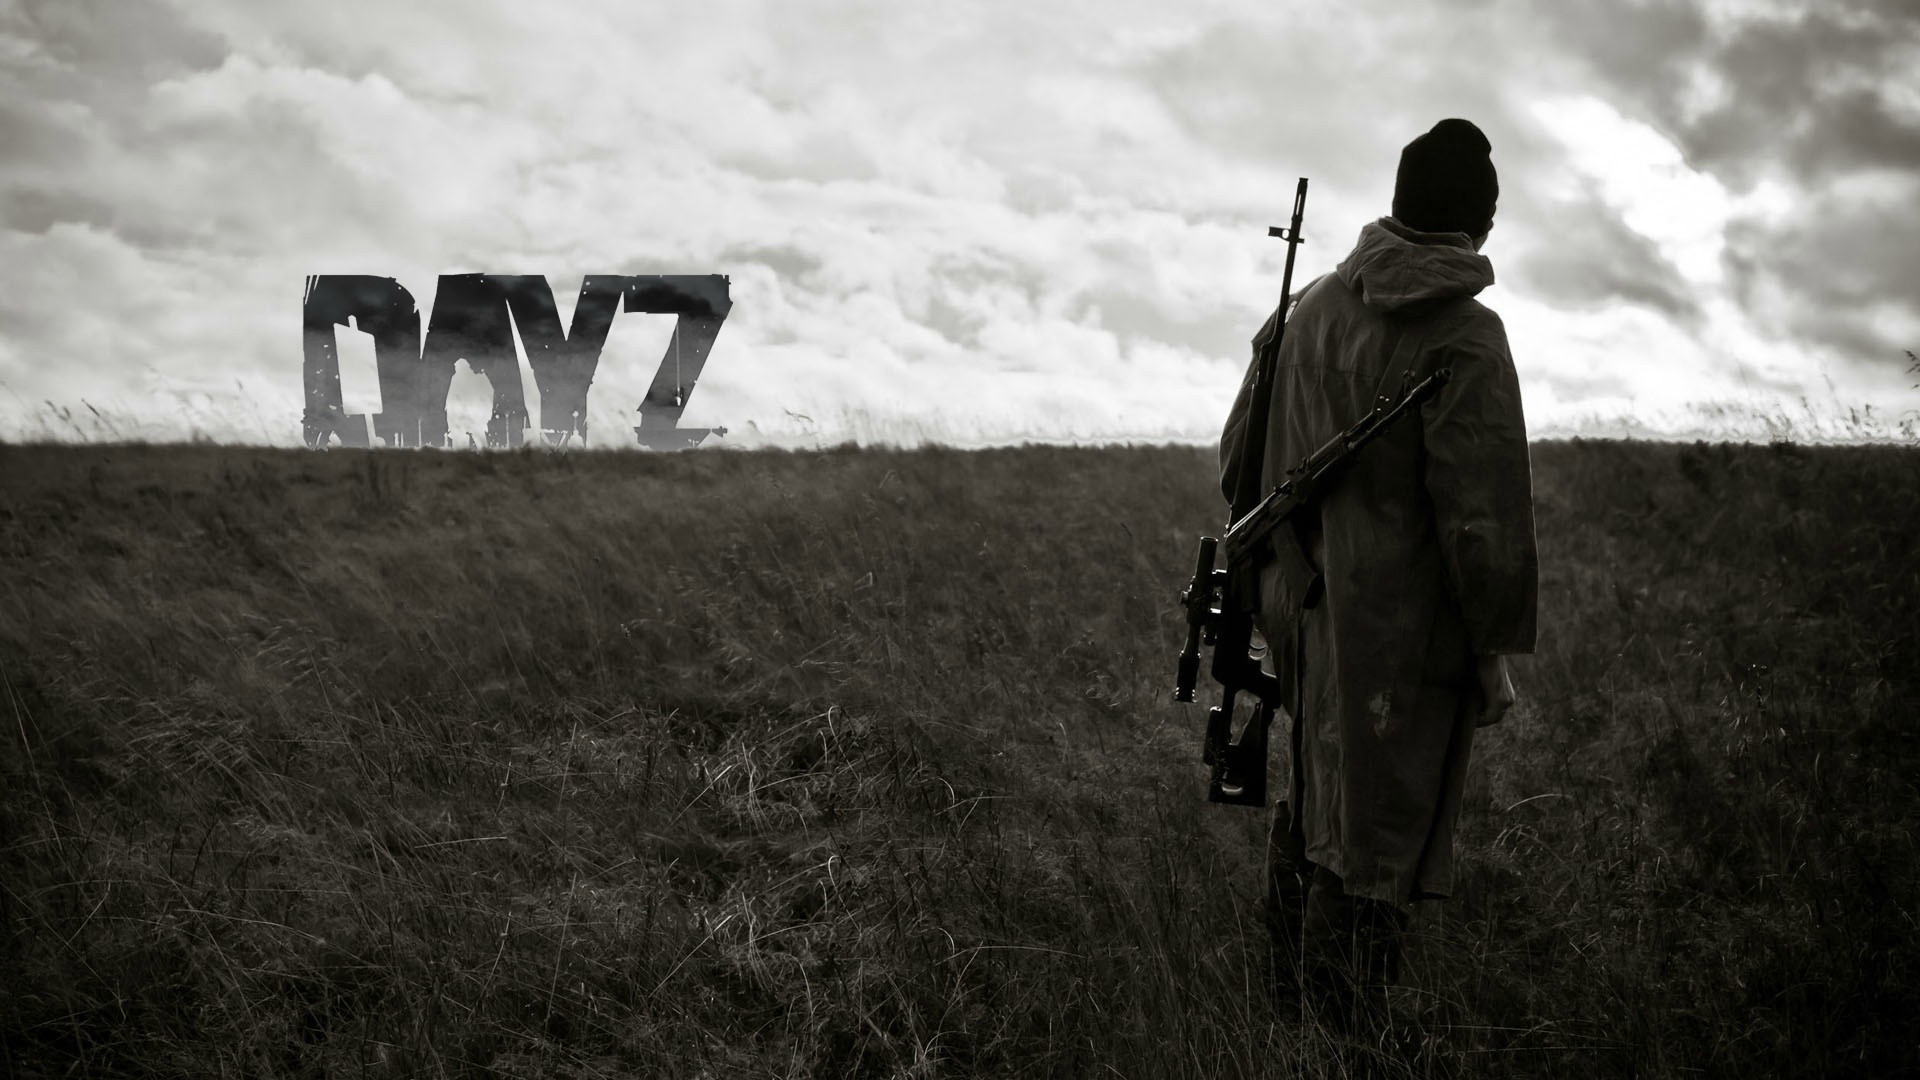 General 1920x1080 video games DayZ gun hat Dragunov weapon rifles men alone standing men outdoors sky field sniper rifle assault rifle